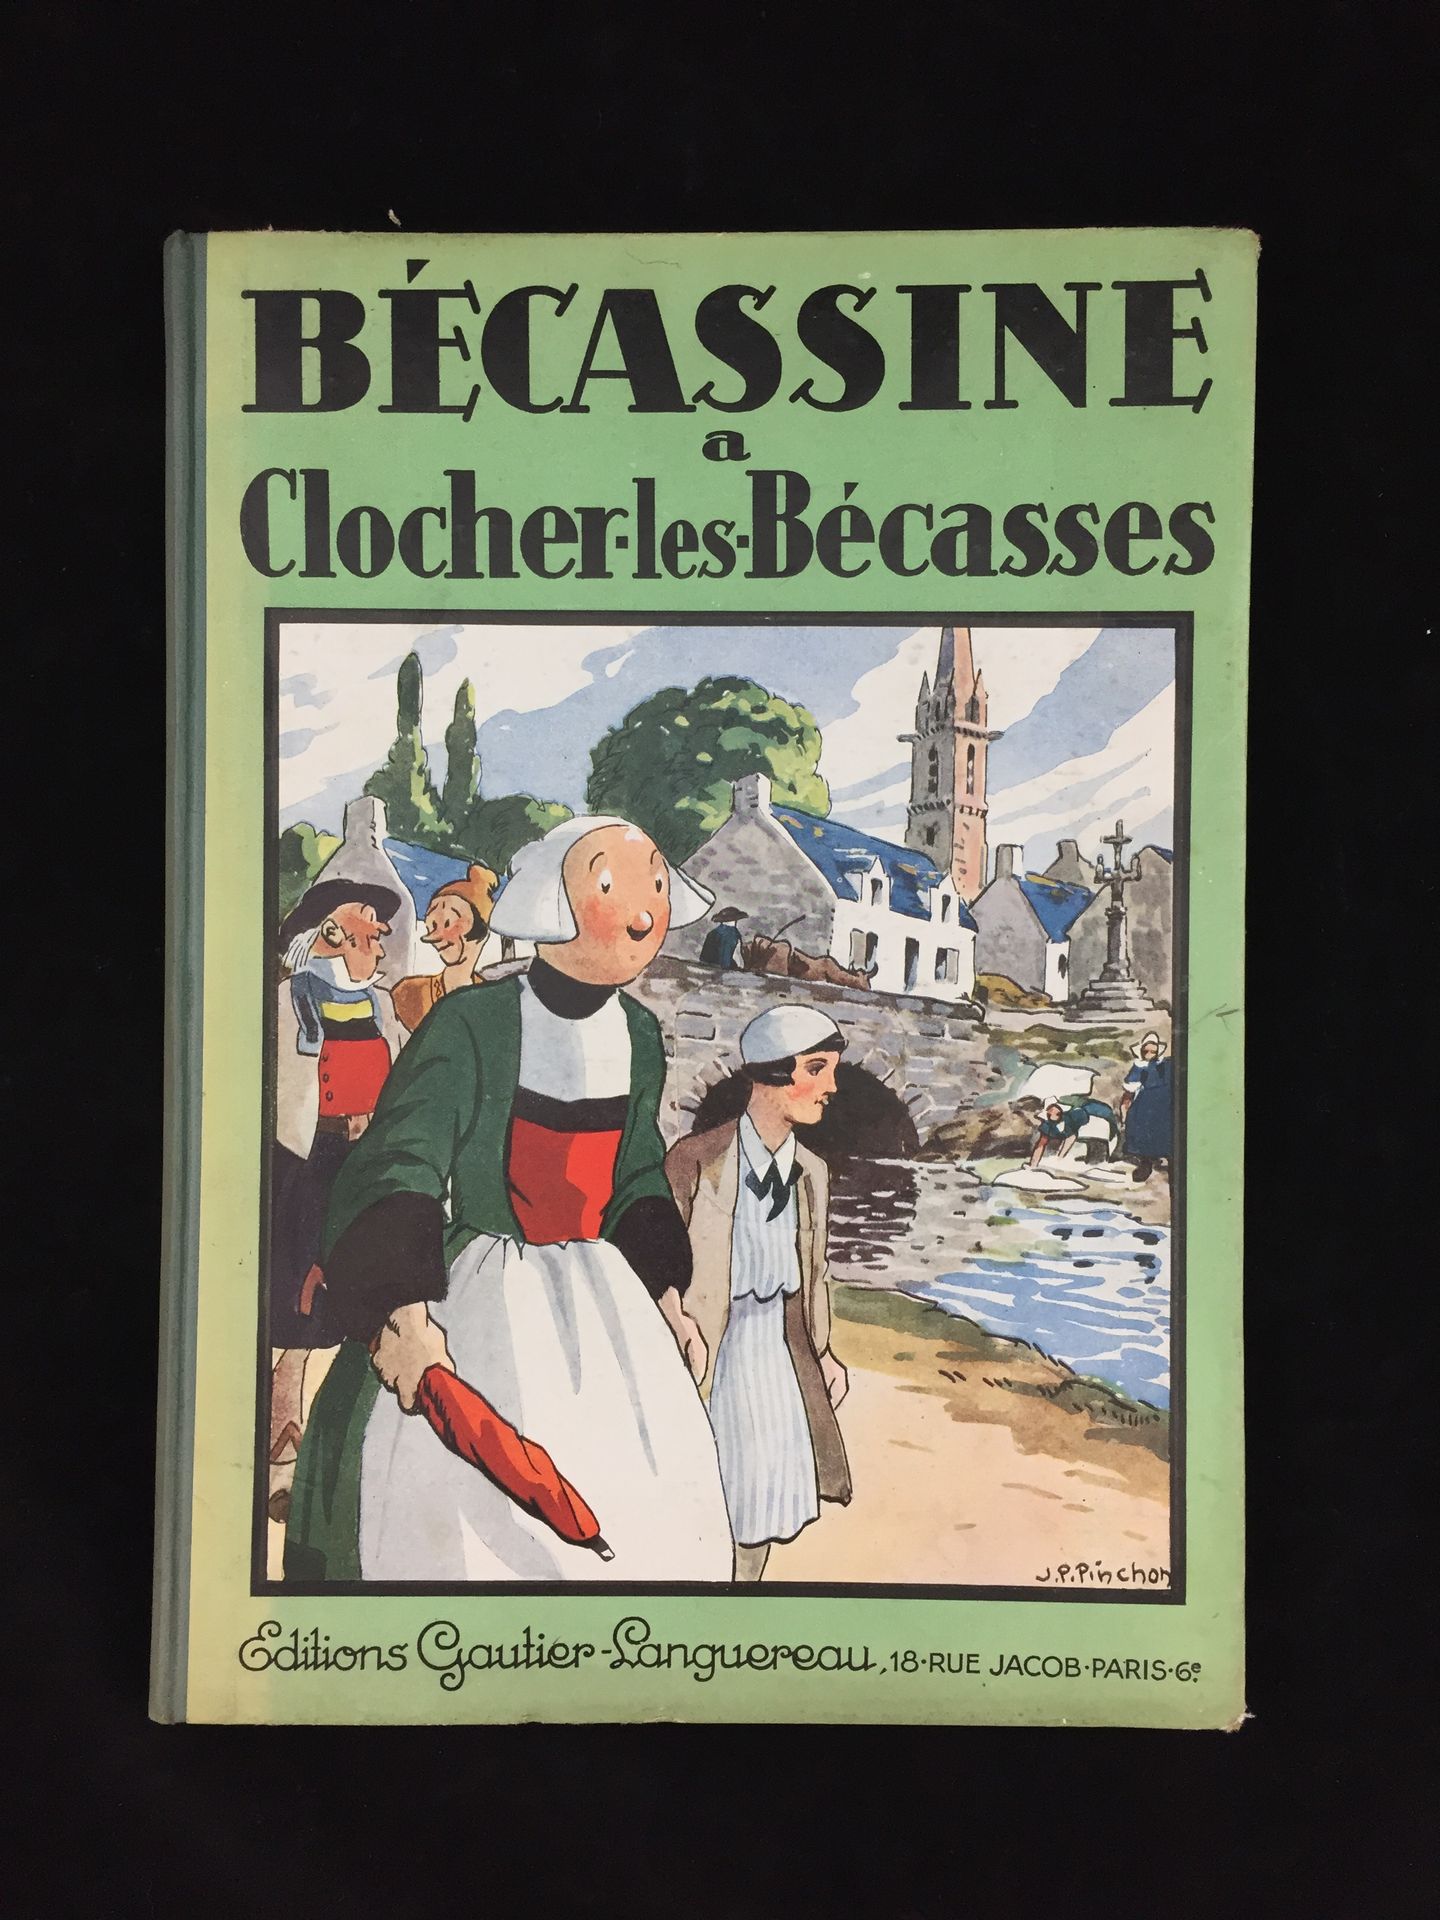 Null Bécassine à Clocher-les-Bécasses。巴黎雅各布街18号高迪尔-朗格罗编辑。1935年版。状况良好。